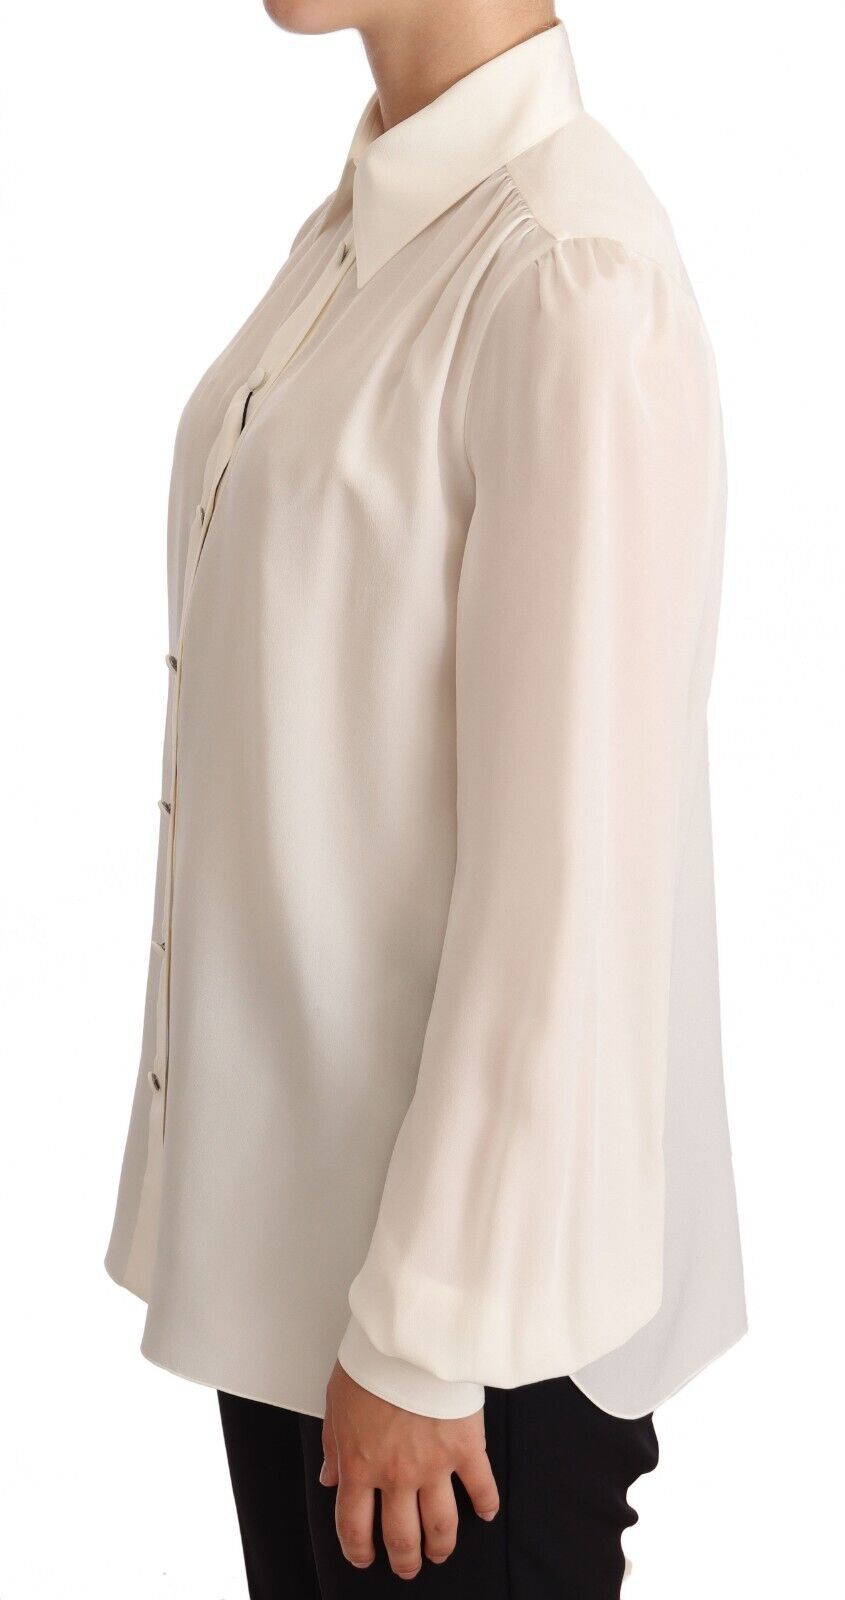 Dolce & Gabbana White Long Sleeve Polo Shirt Top Bluse